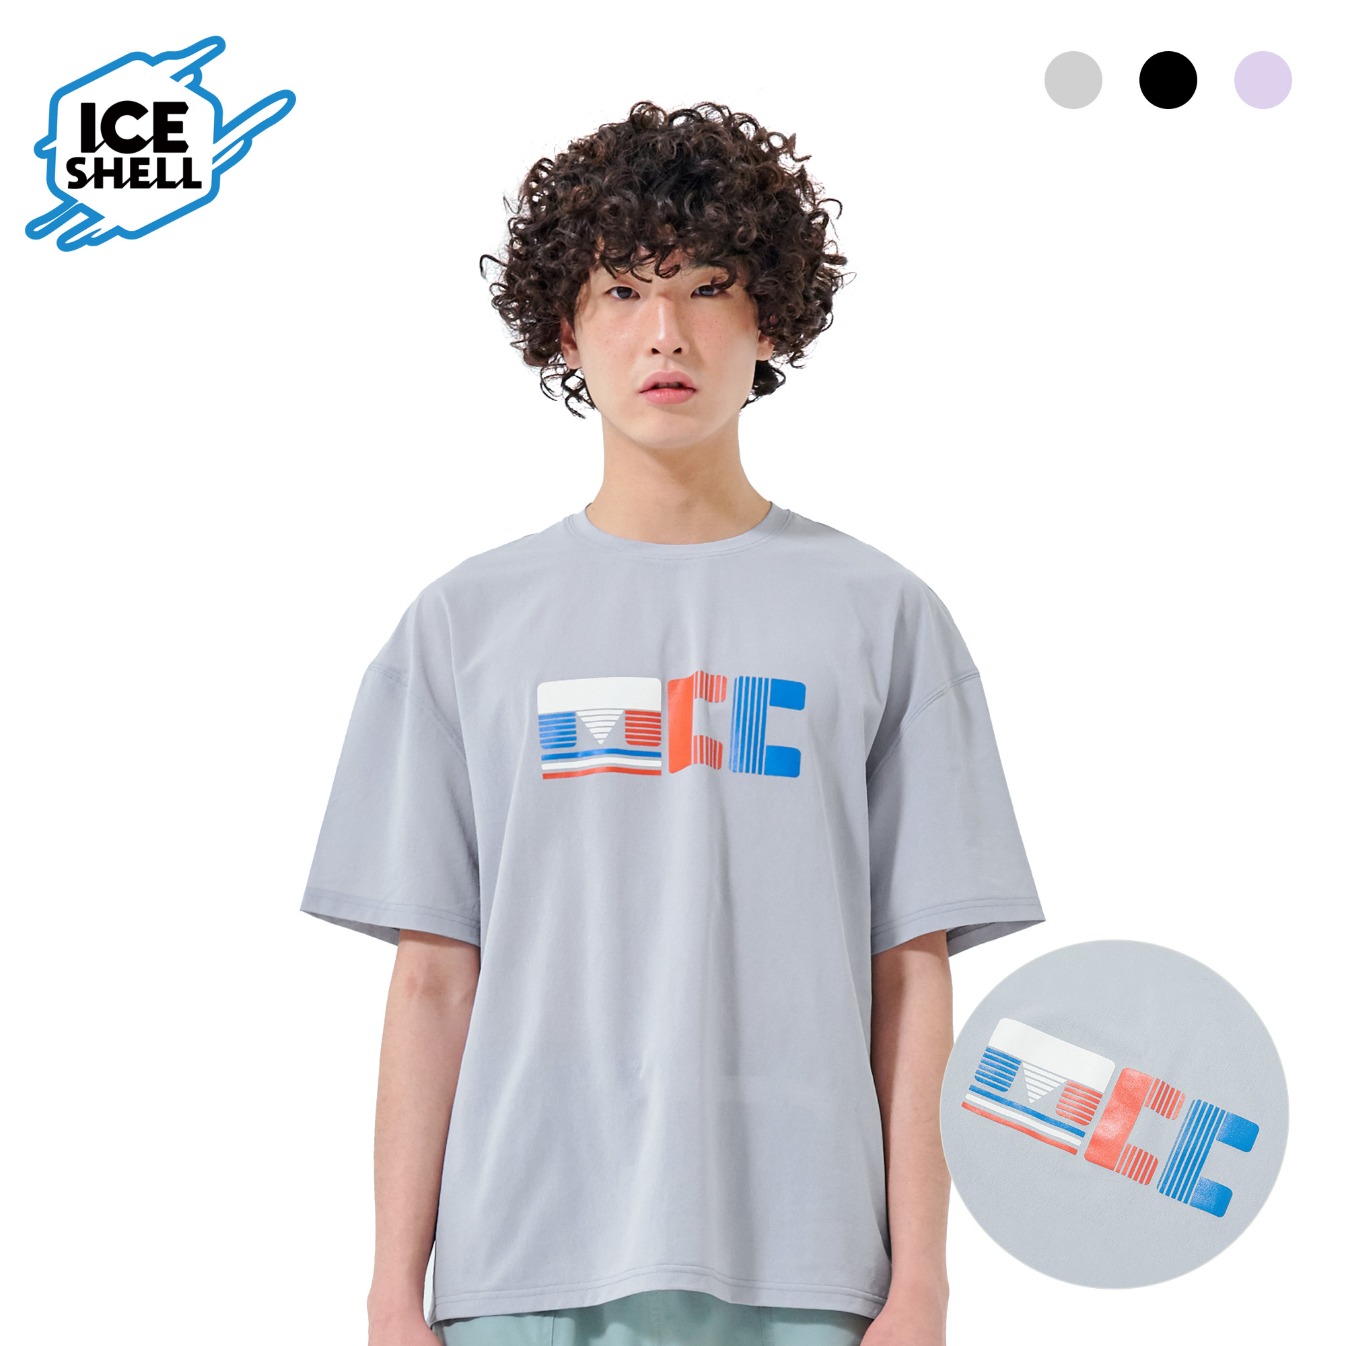 MCC GRAPHIC ICE SHELL T-SHIRTS